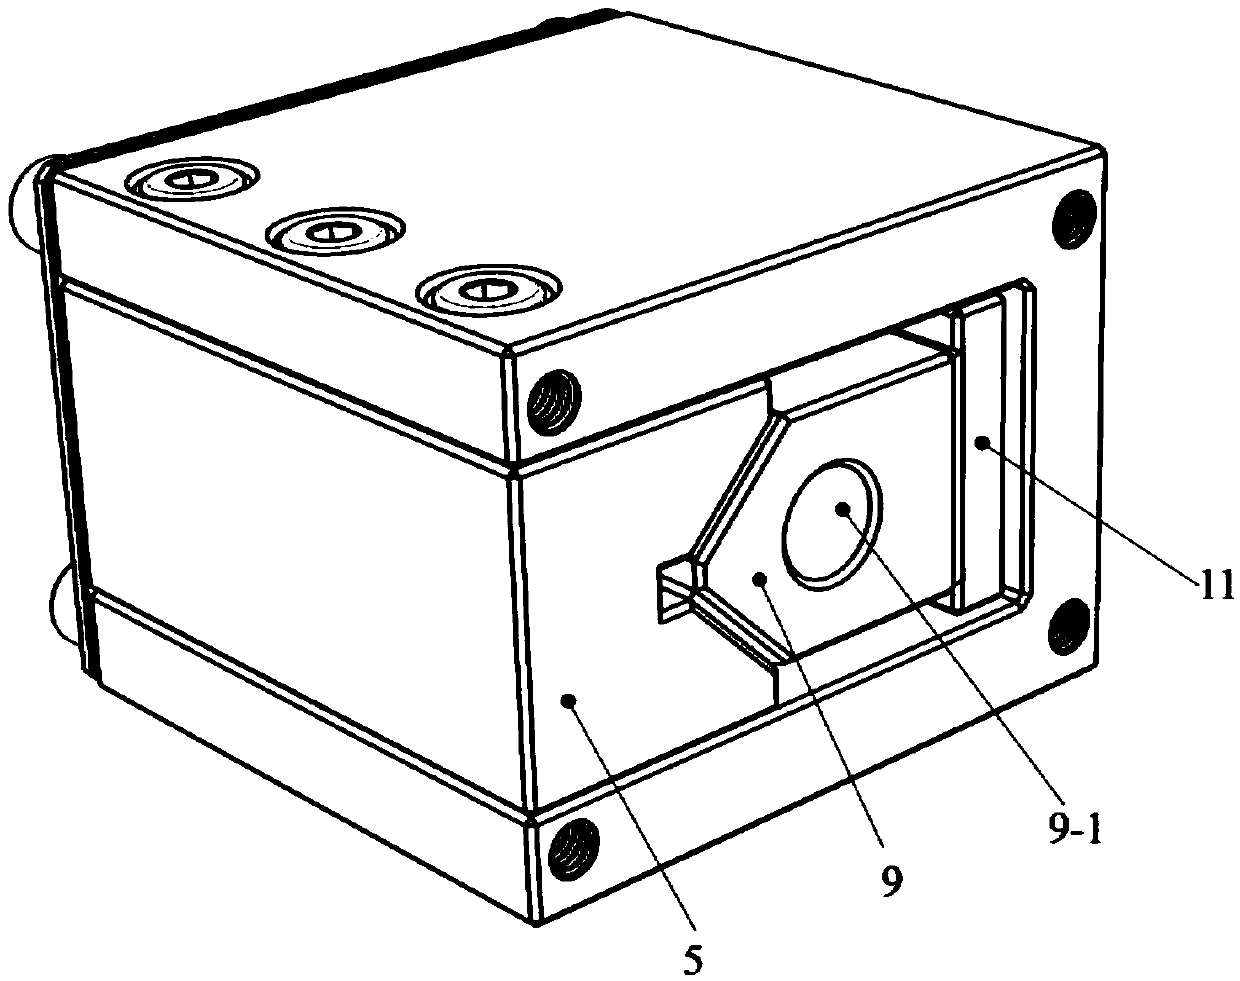 A high-precision diamond pen grinding wheel dresser and its installation method